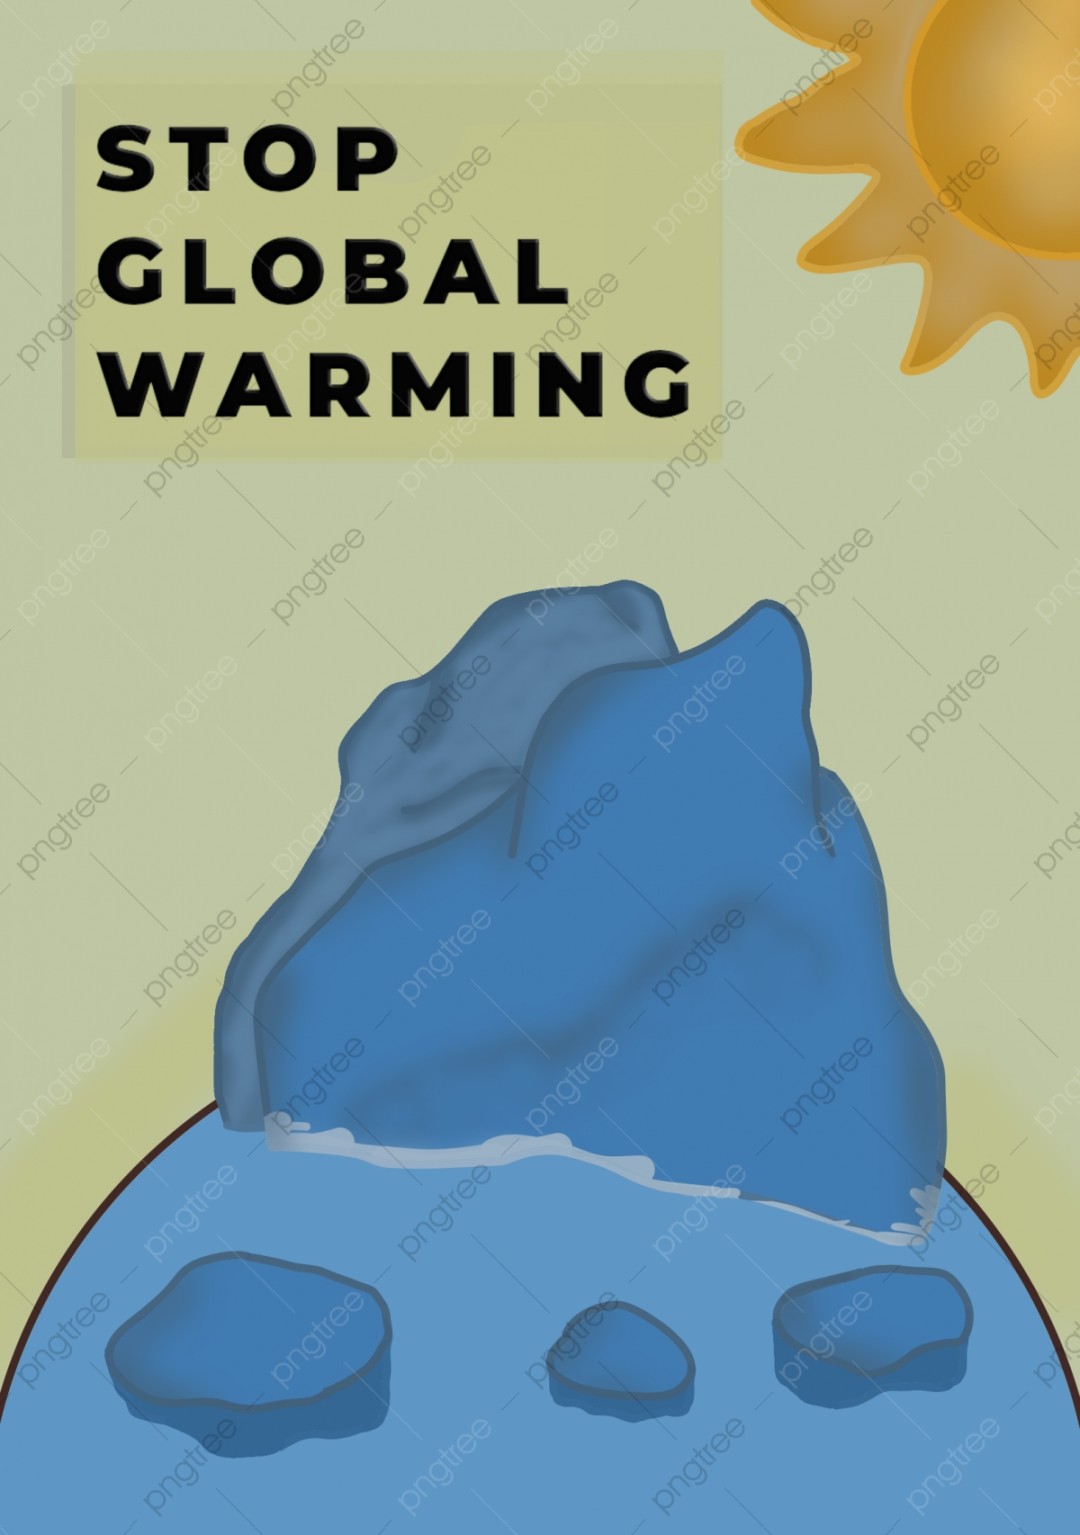 poster tentang stop global warming